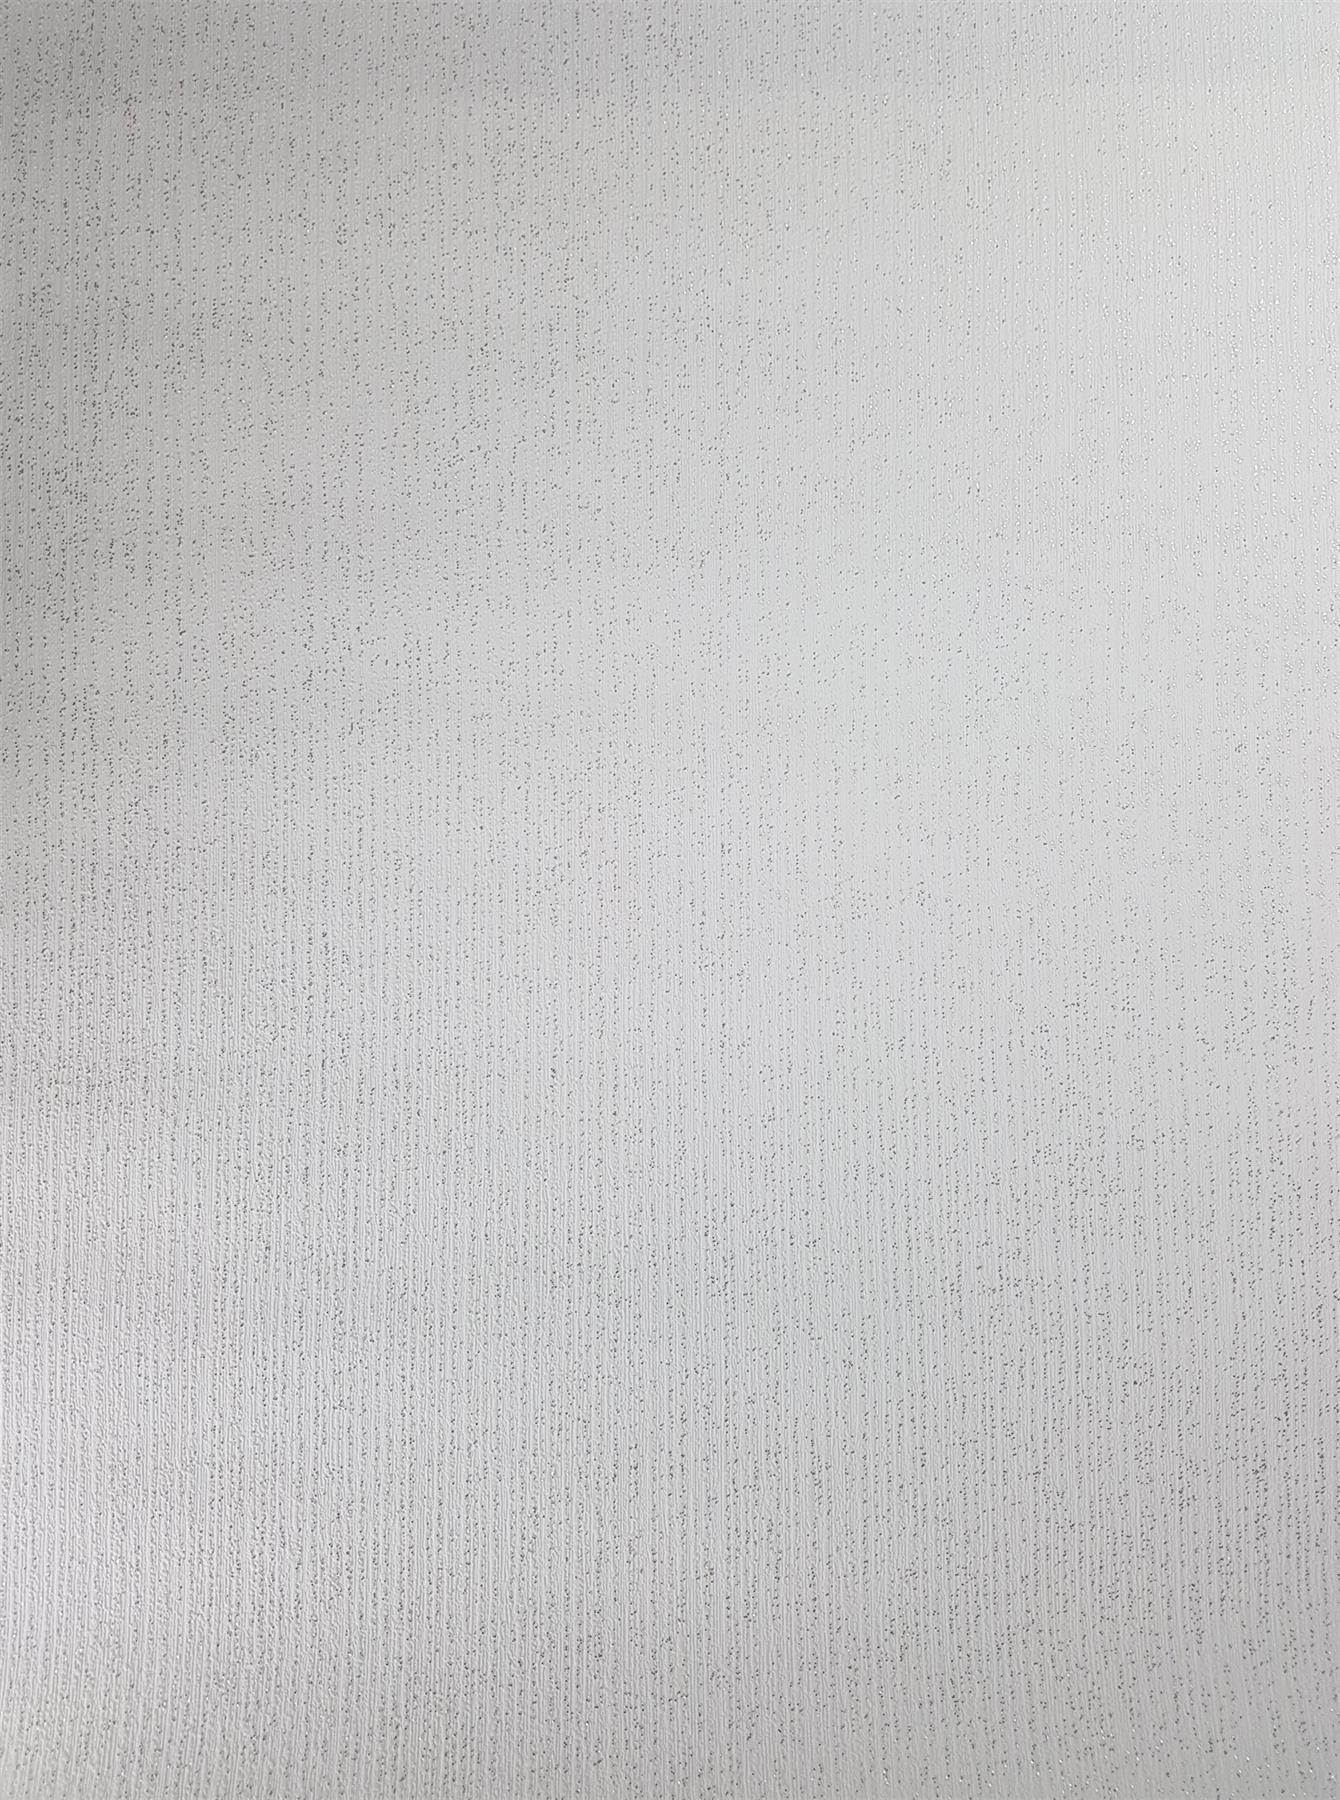 Silver Plain Texture - HD Wallpaper 